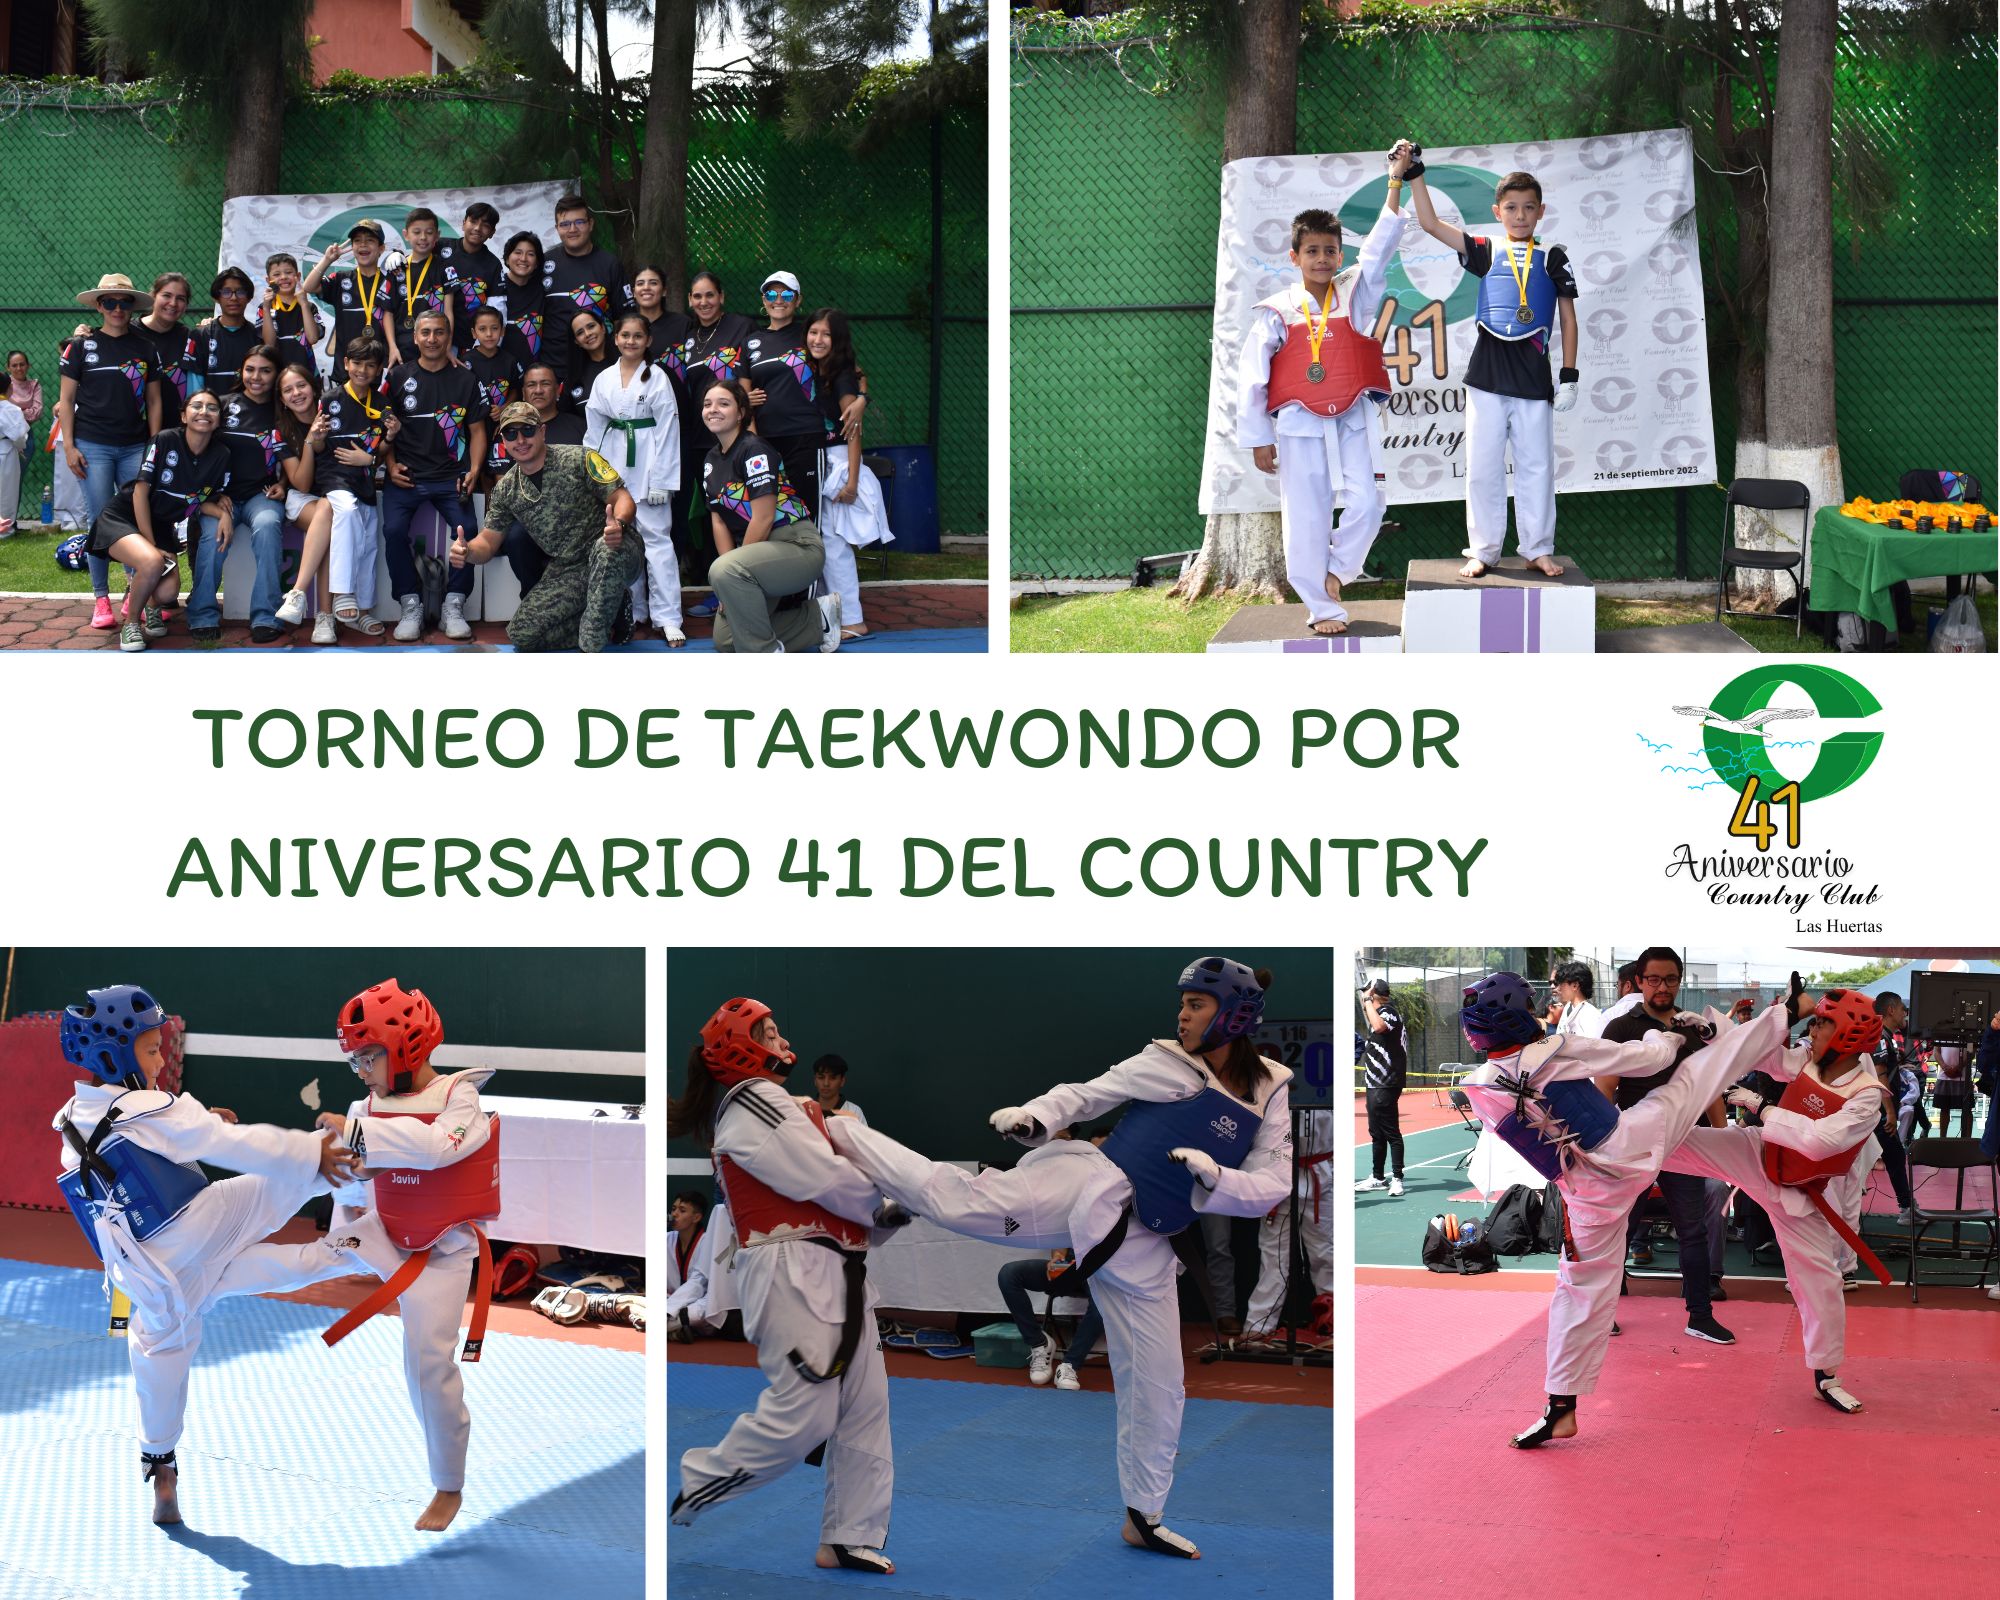 Torneo de Taekwondo por aniversario